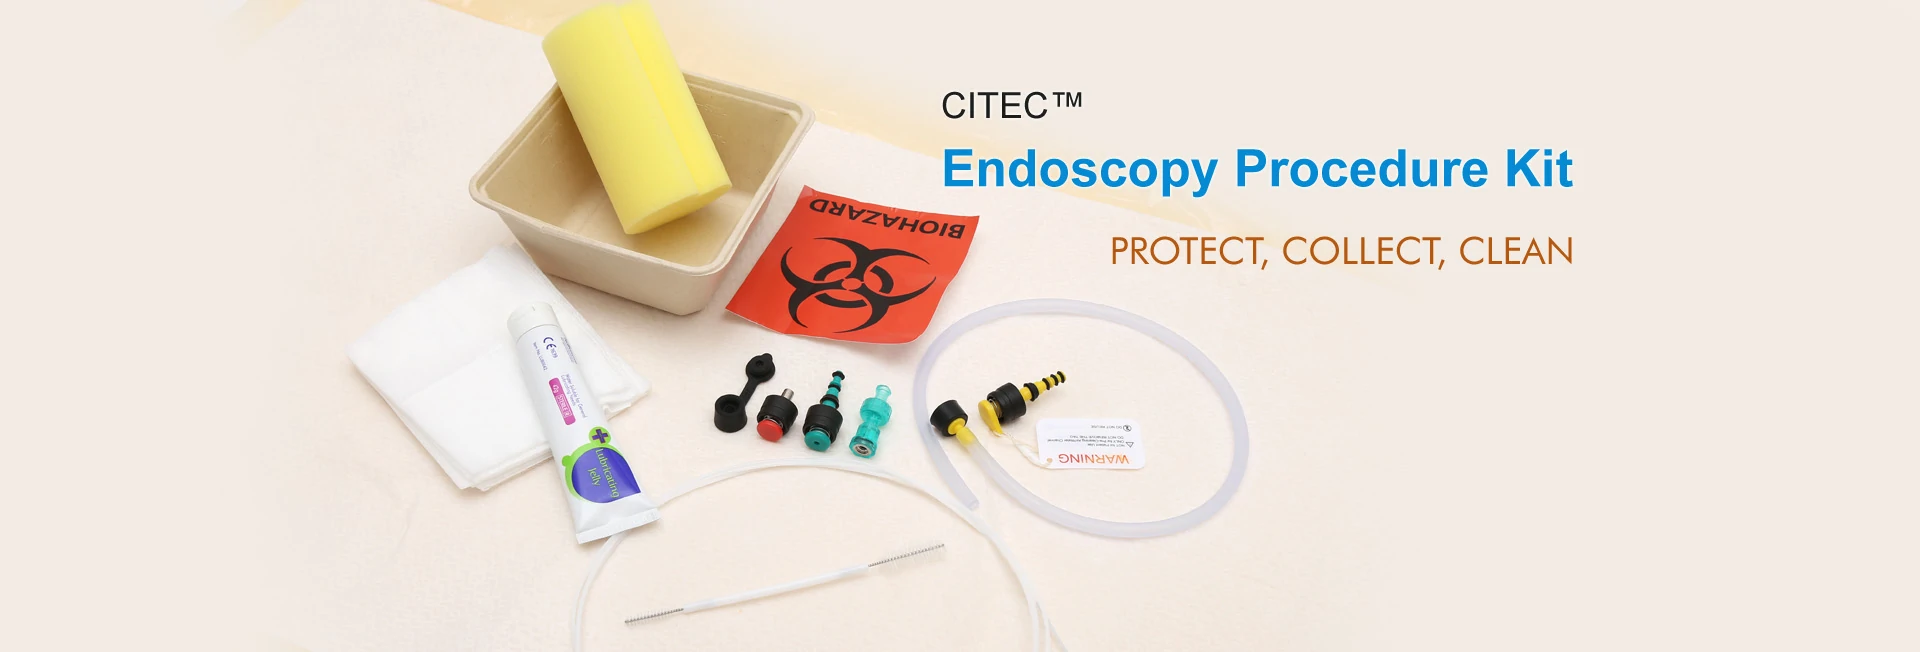 CITEC™ Endoscopy Procedure Kit